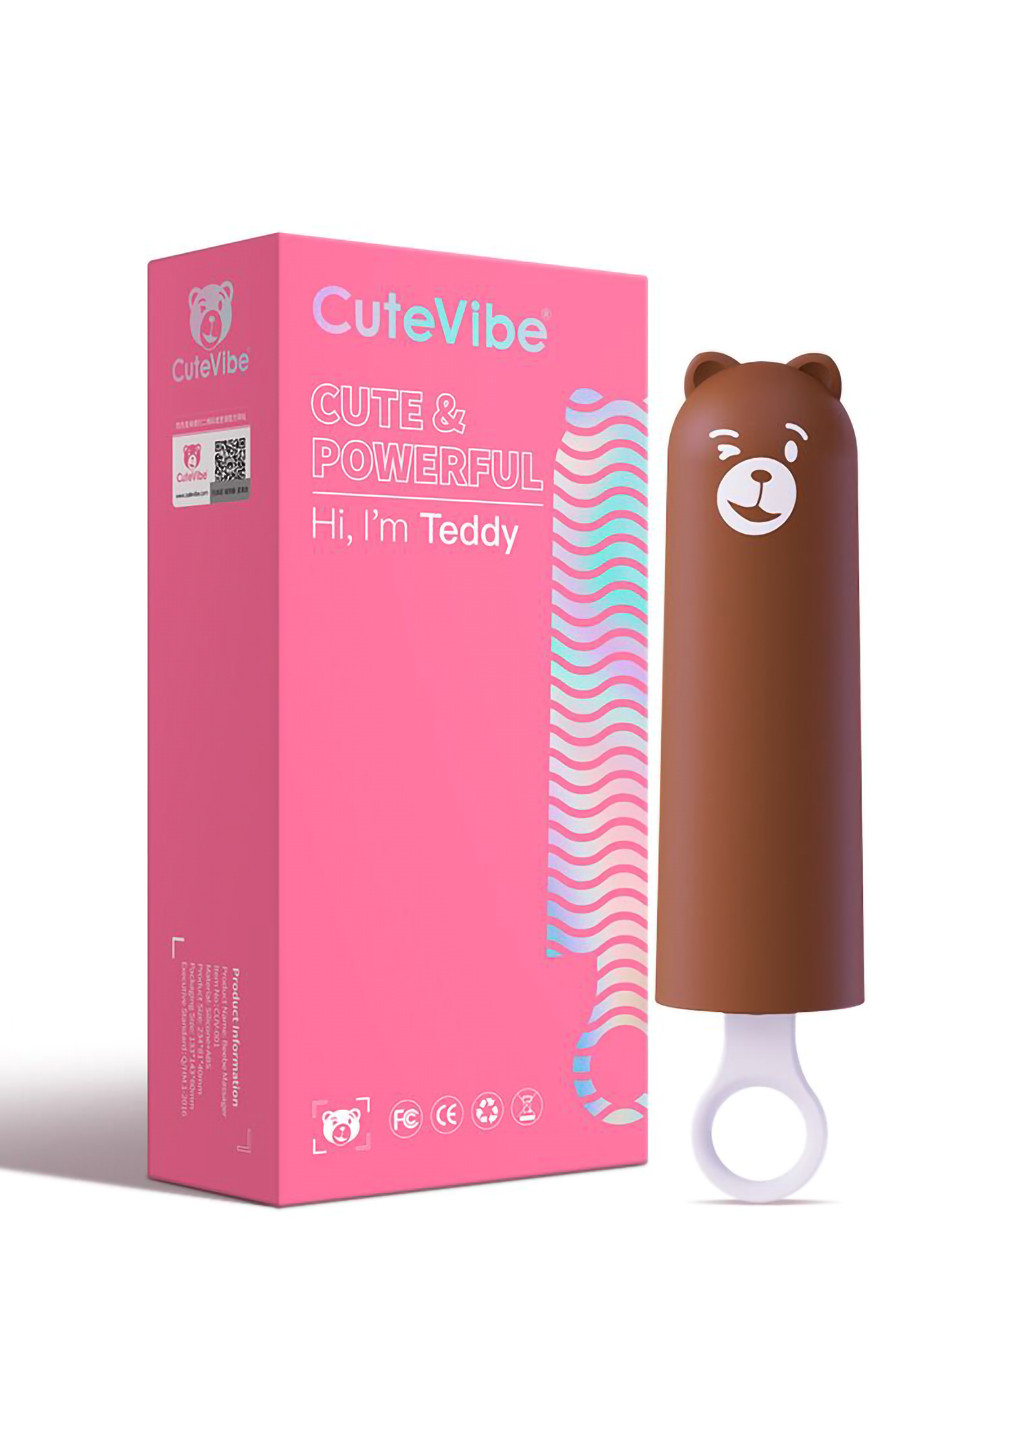 Вибратор Teddy Brown (Pink Dildo), реалистичный вибратор под видом мороженого Cute (254151146)